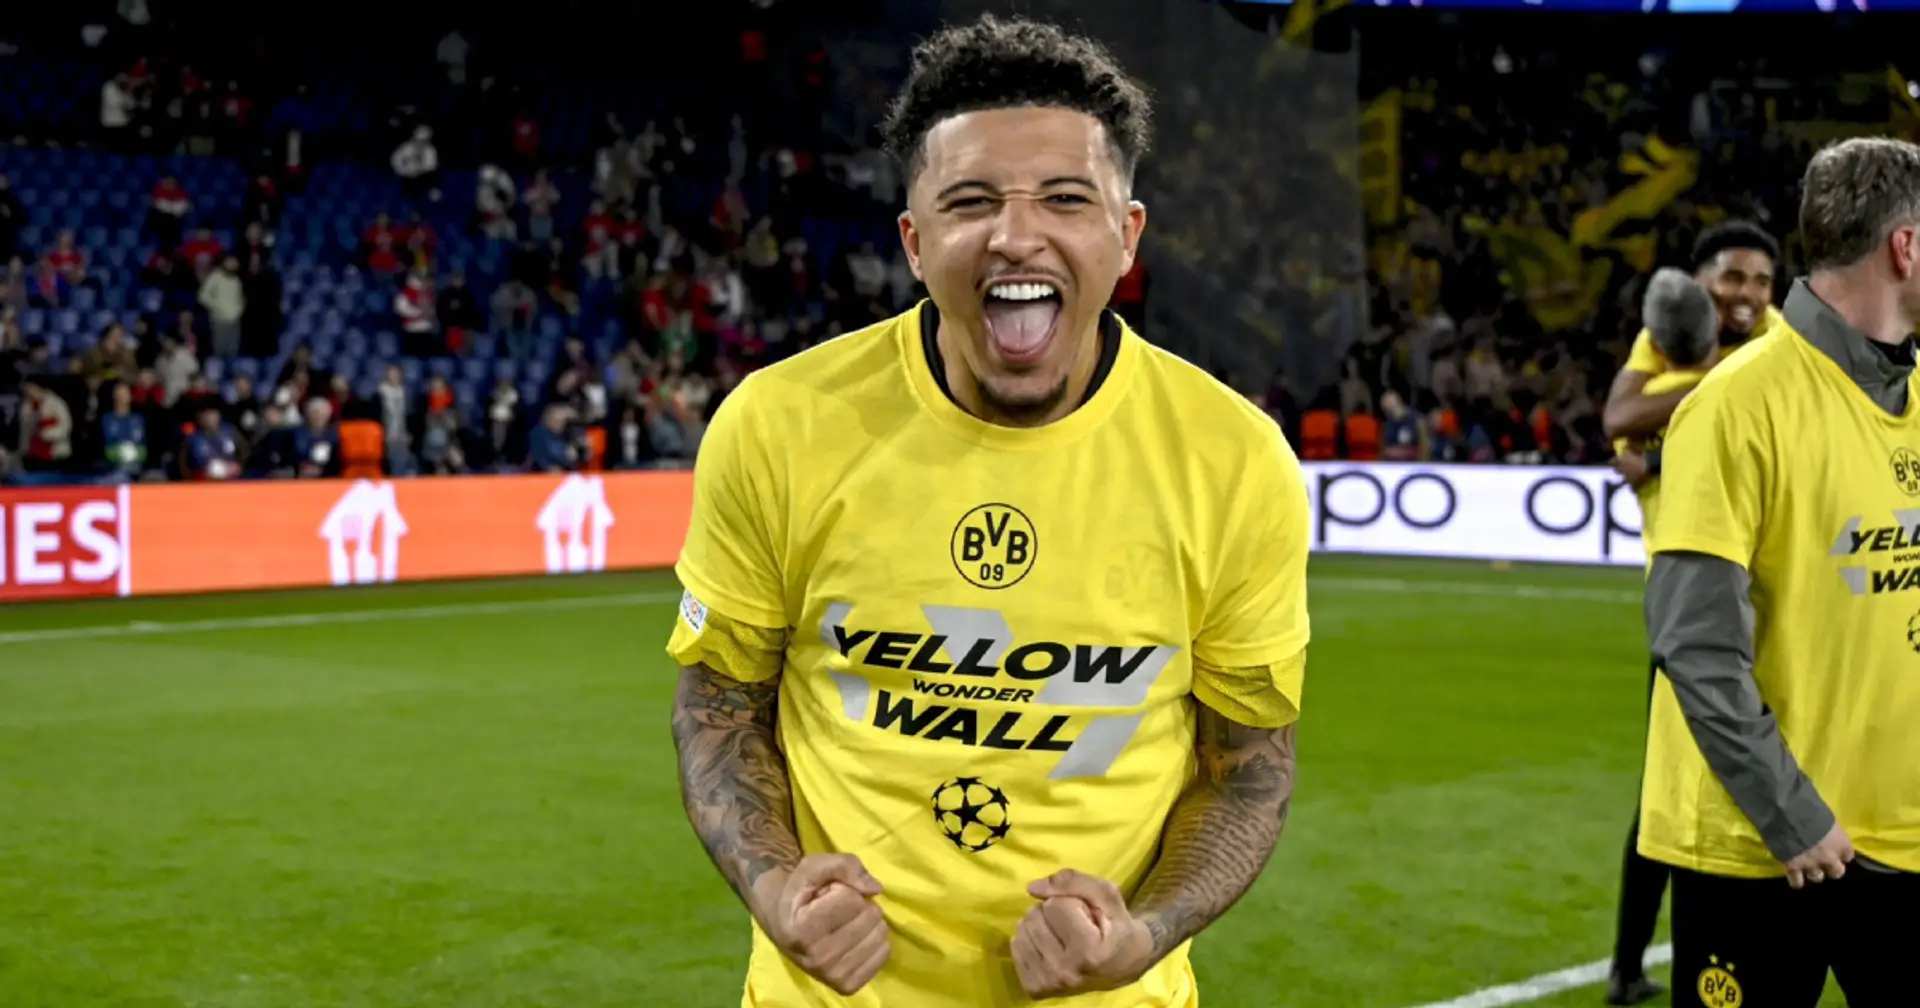 'Wow wow wow': Jadon Sancho reacts to reaching Champions League final with Borussia Dortmund